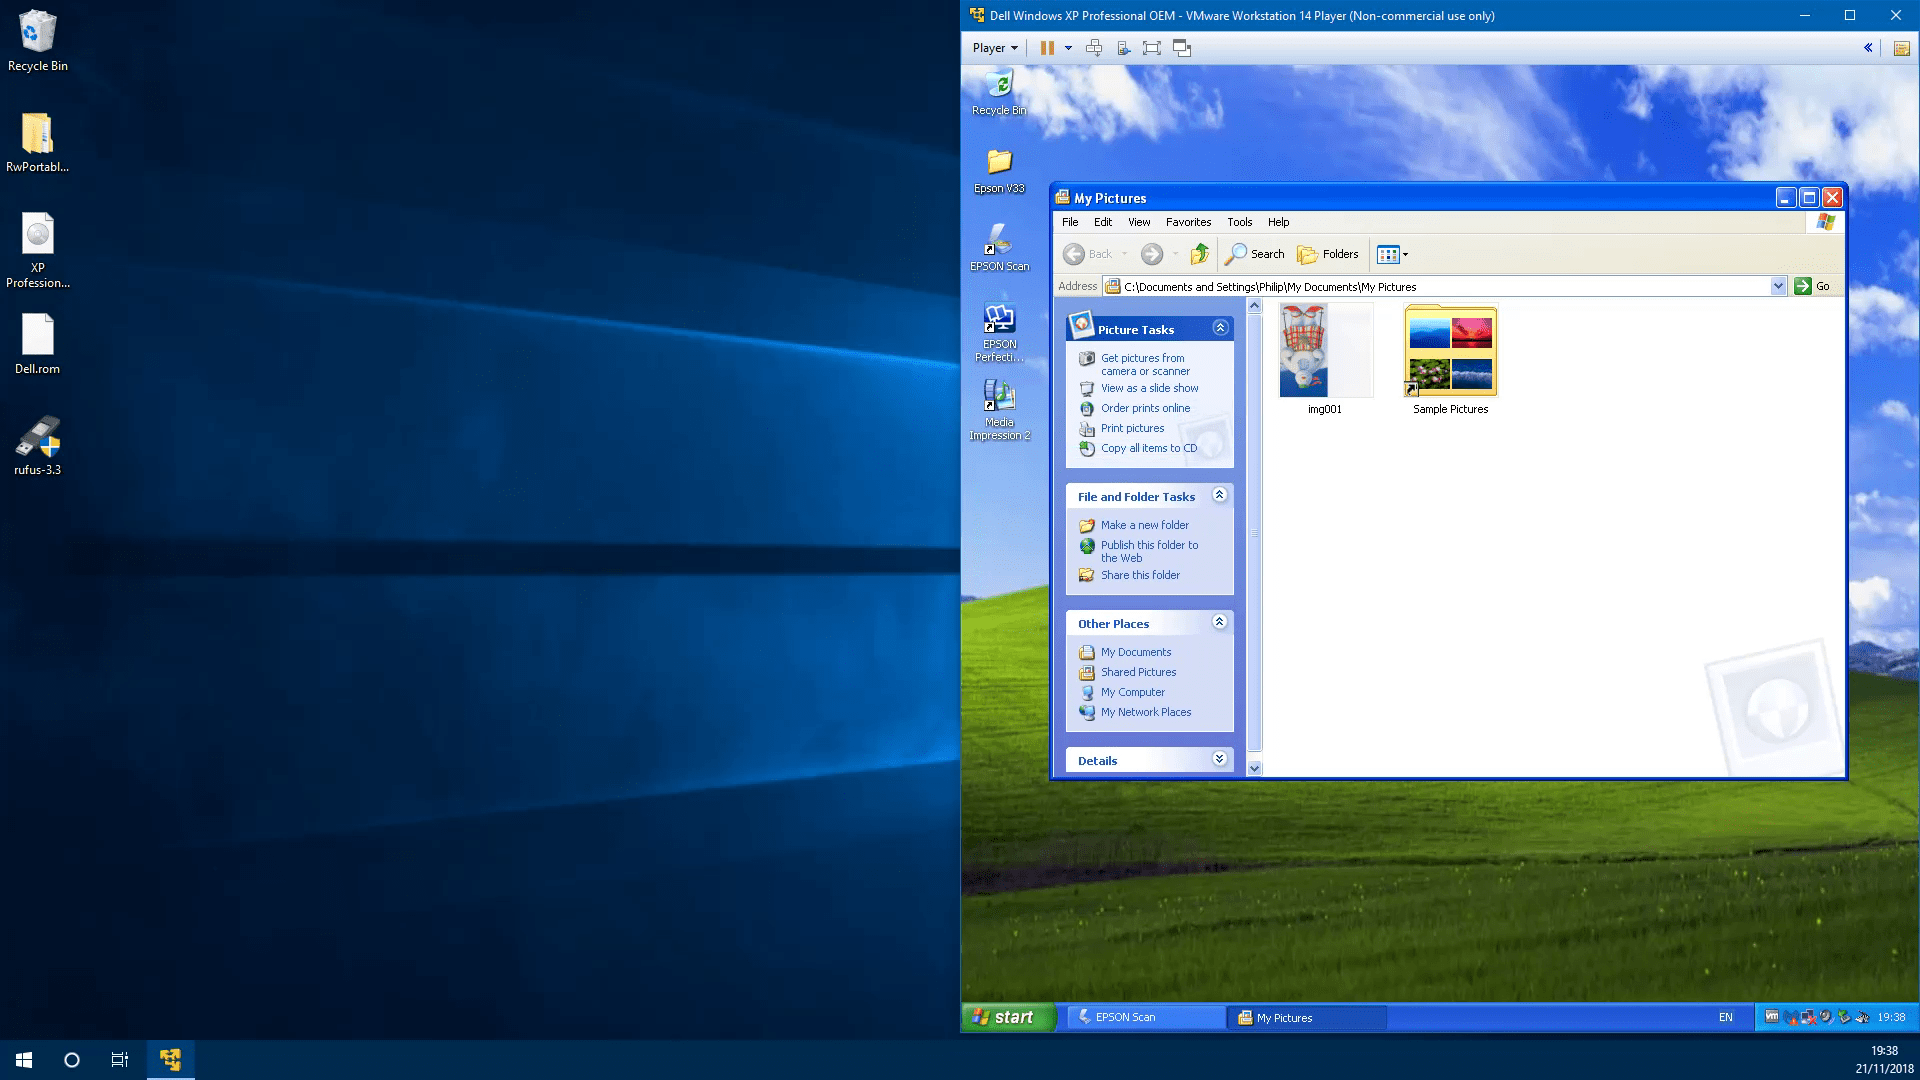 windows xp professional iso vmware download